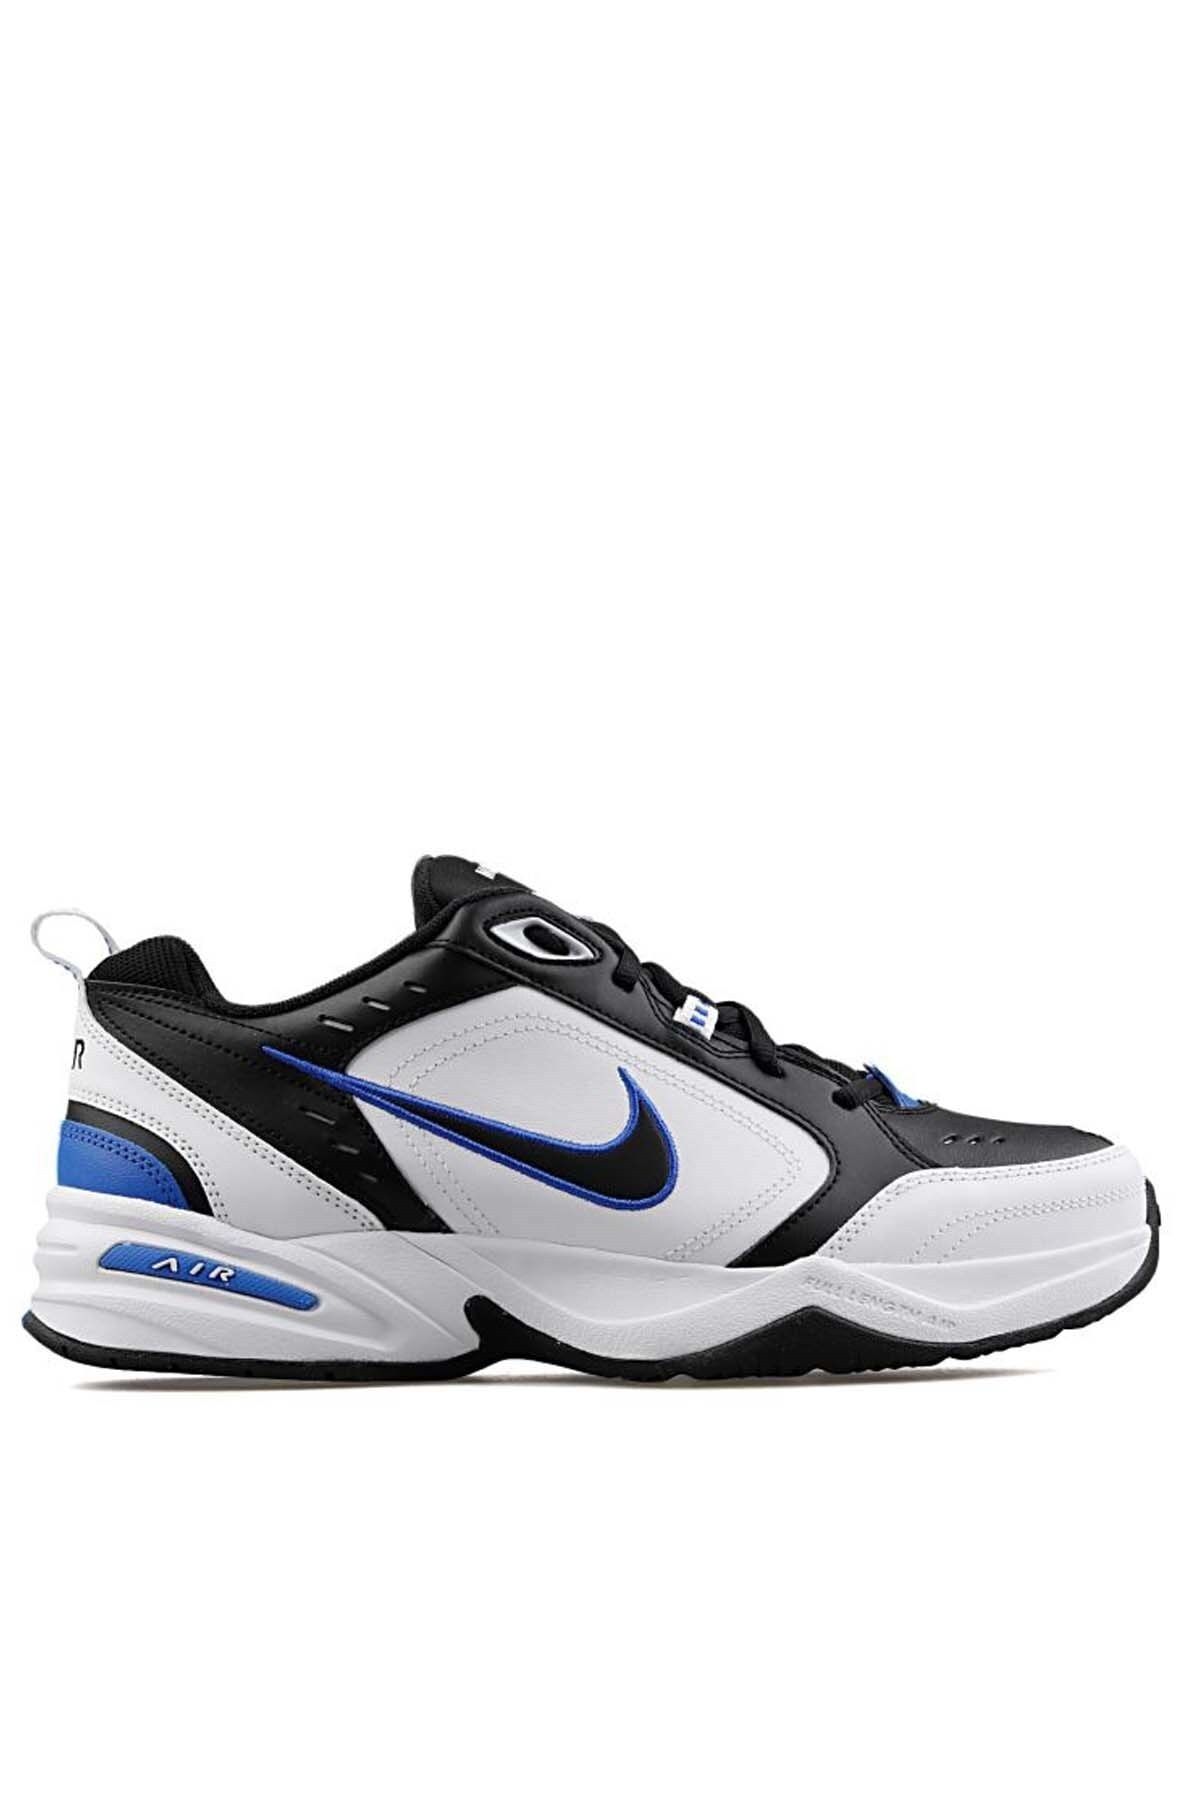 Nike Air Monarch Iv 4 Siyah Beyaz Mavi Retro Unisex Sneaker Ayakkabı 415445-002